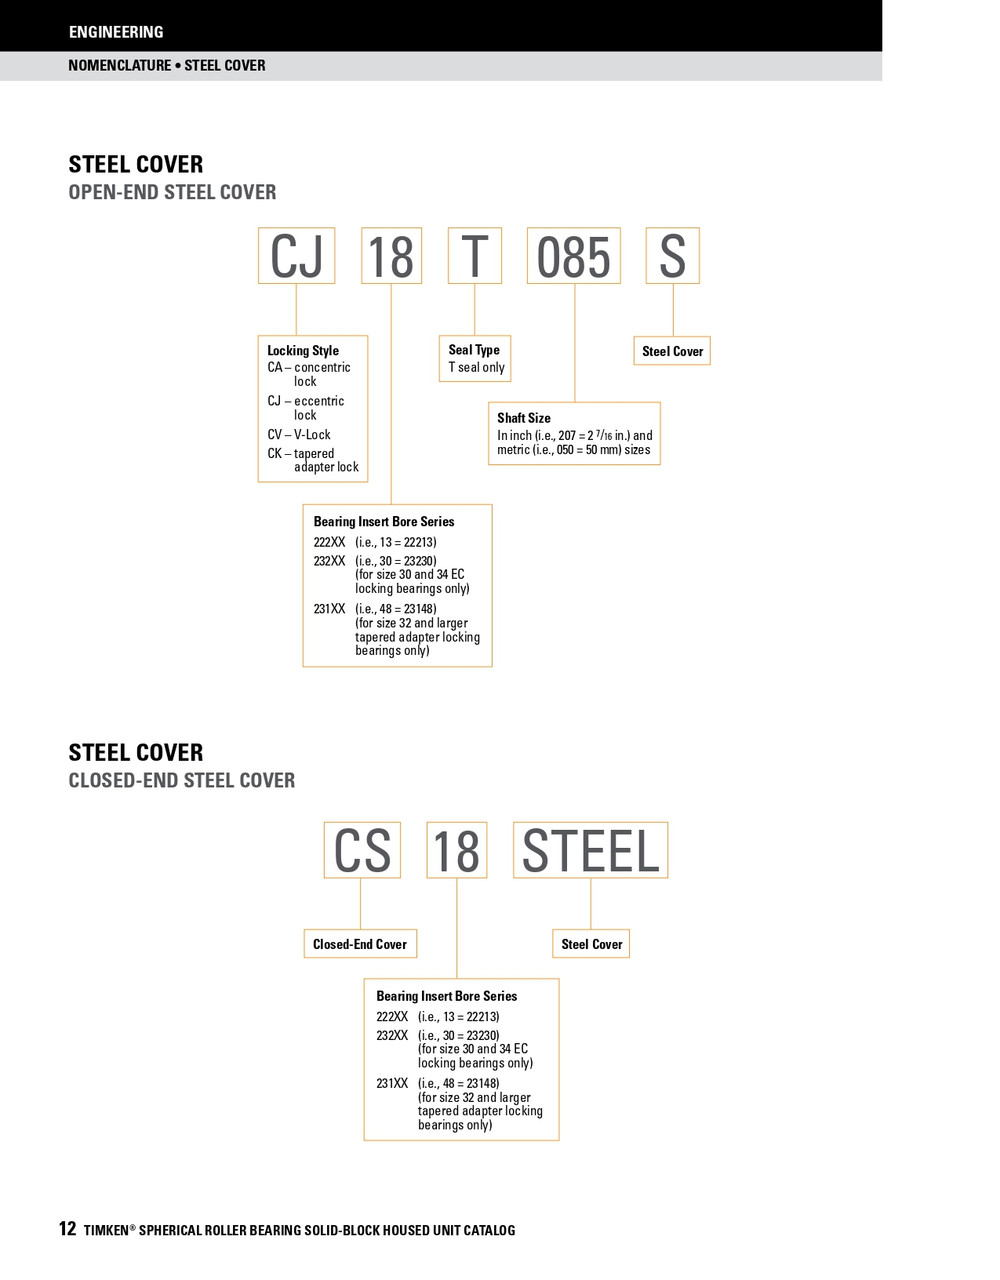 2-3/16" Timken SRB Steel Open End Cover w/Teflon Seal - QV V-Lock® Type   CV13T203S